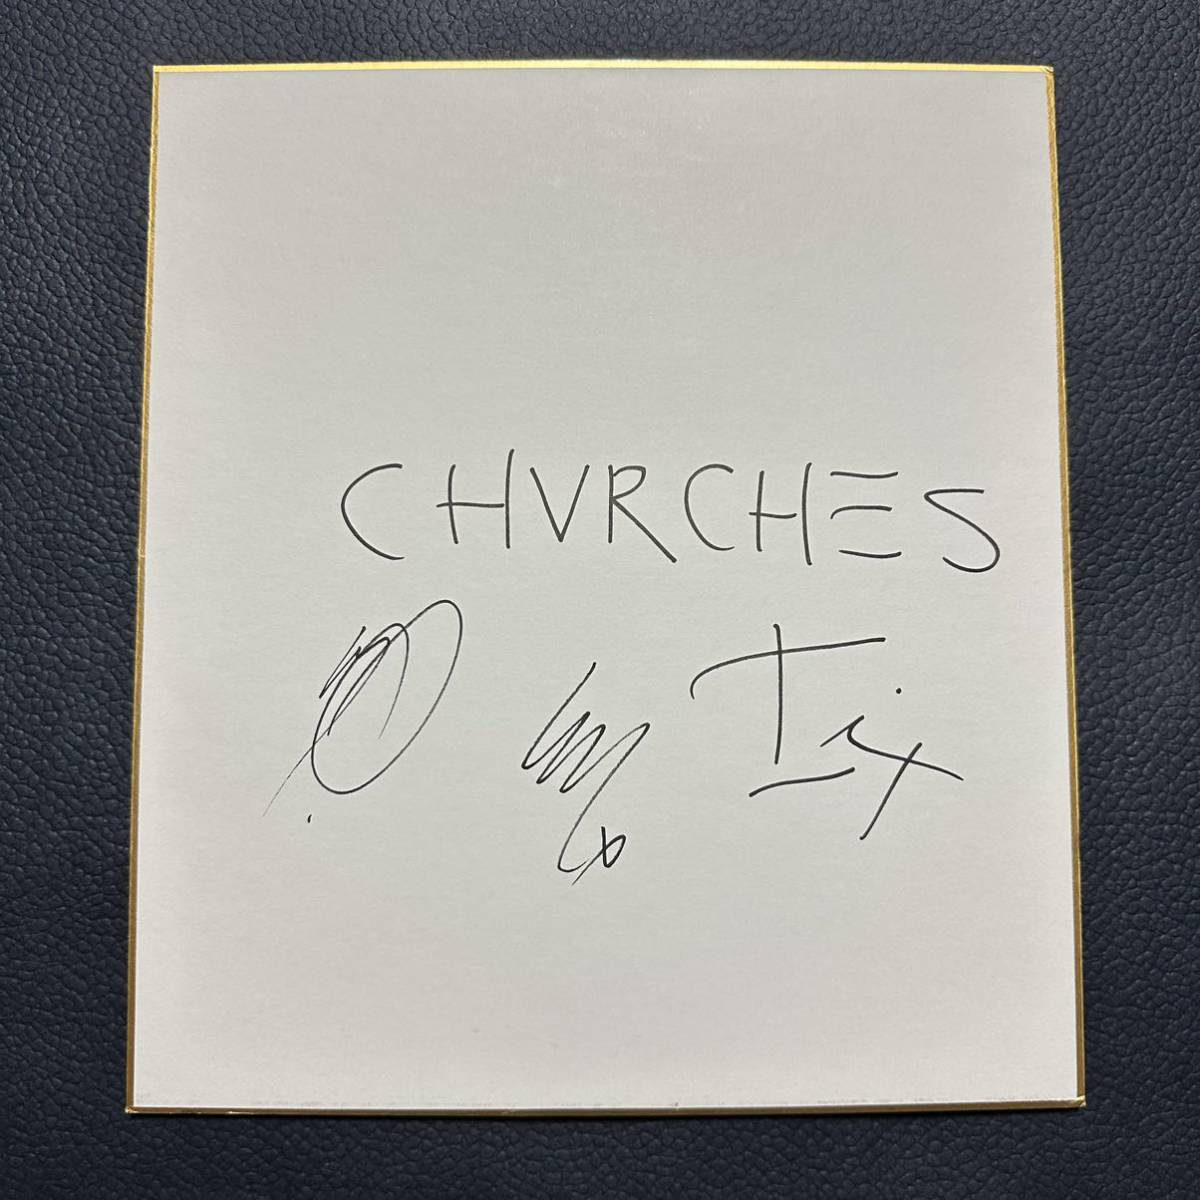 CHVRCHES 친필 색종이 CHVRCHES 록 밴드 앨범 CD Mneskin Marshmello, 연예인용품, 징후